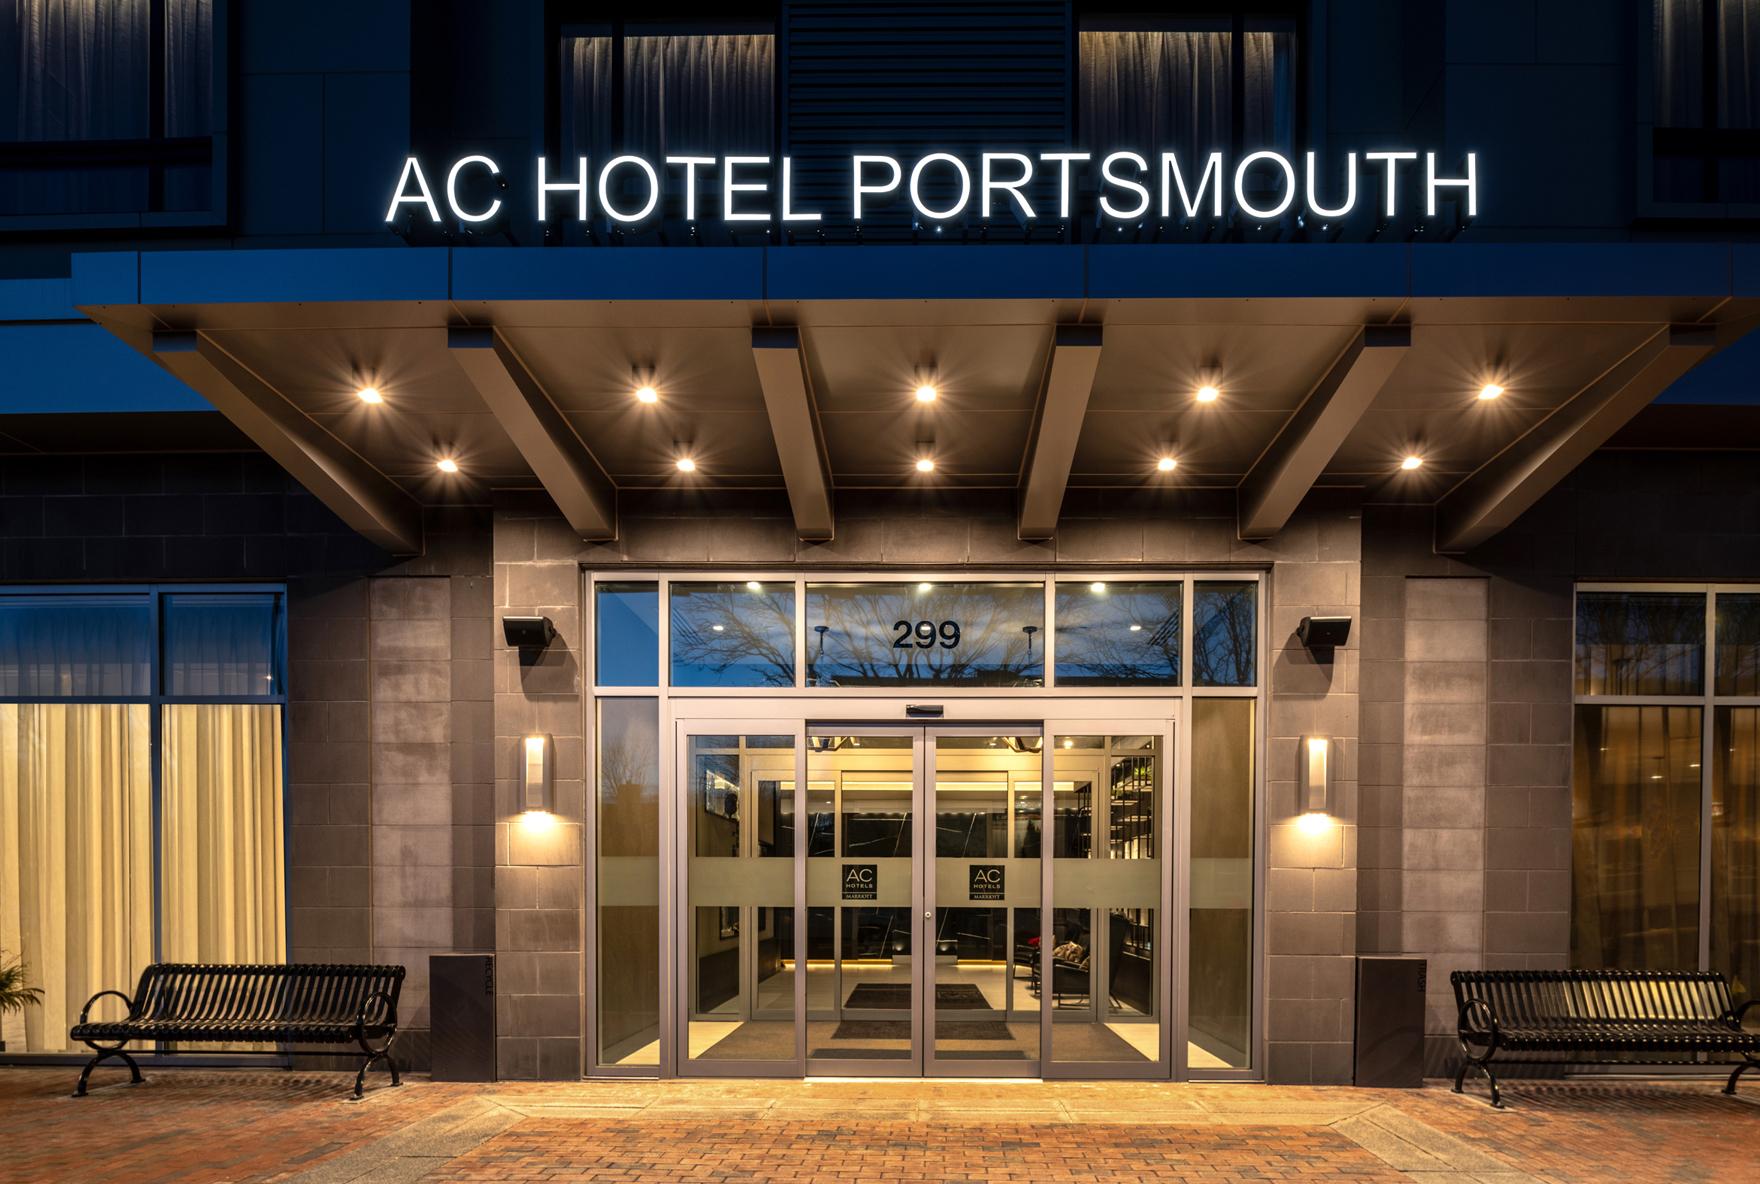 Ac Hotel Portsmouth Exterior Signage